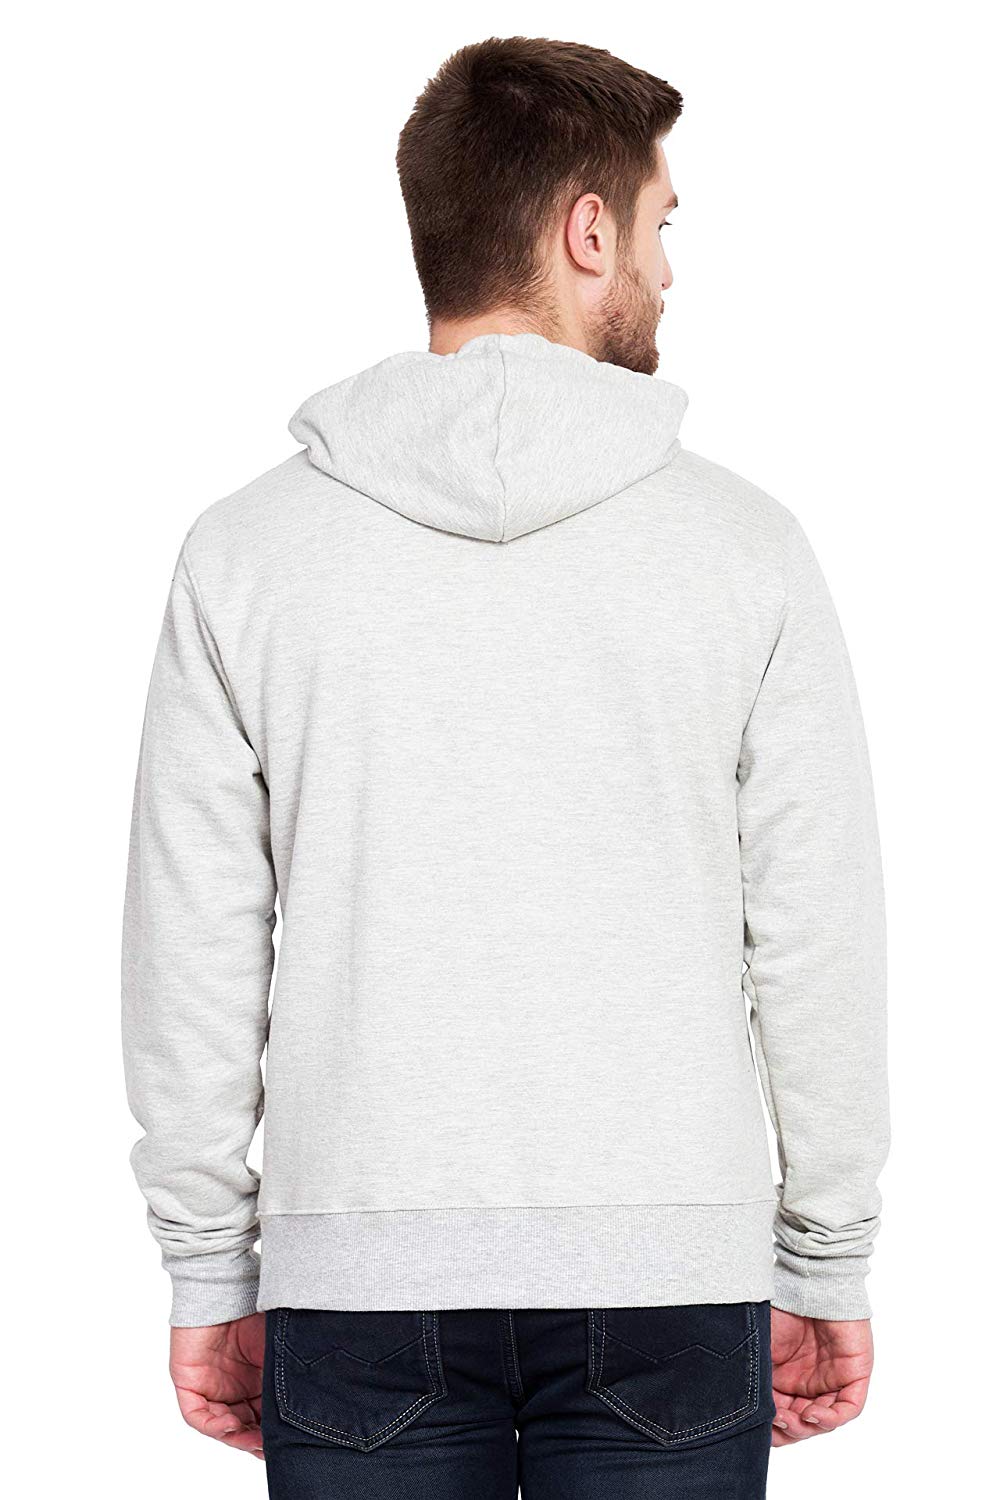 100 % Cotton Hoodies For Men In Grey Color